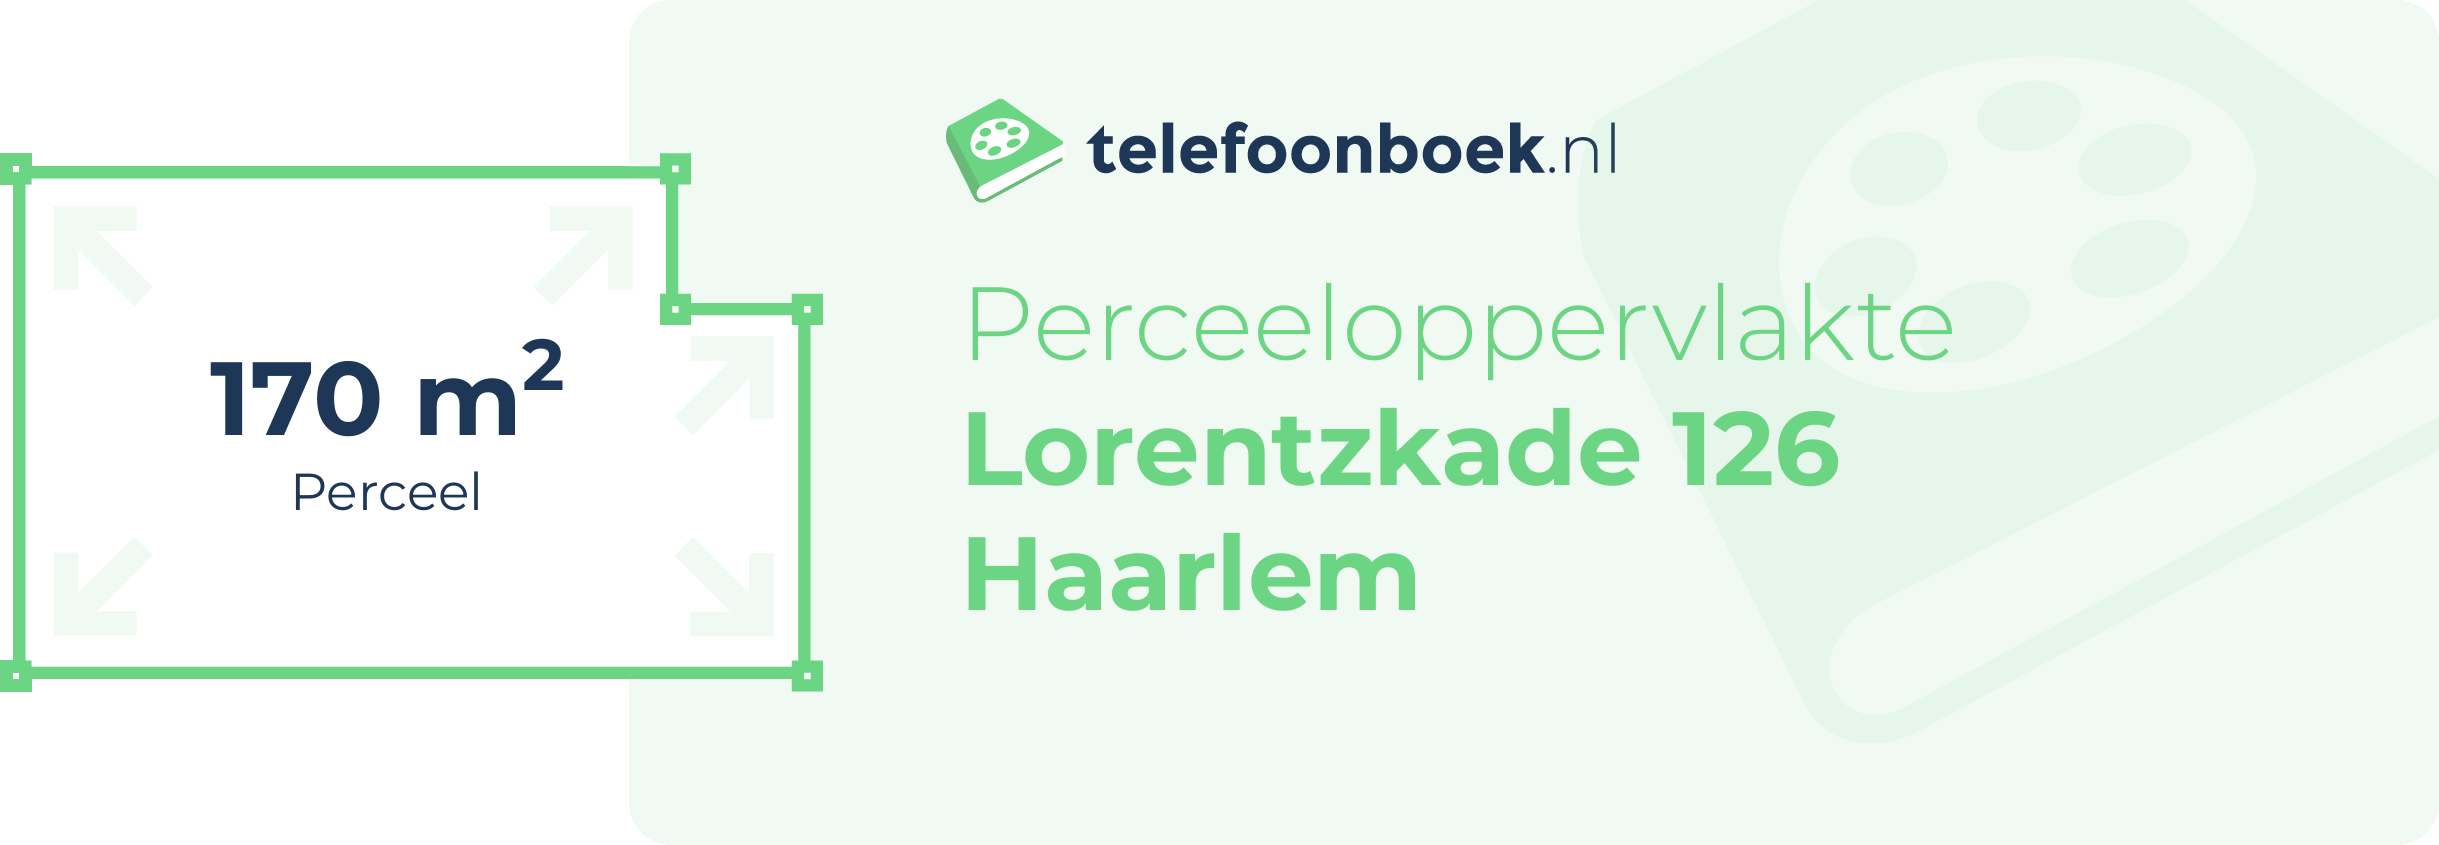 Perceeloppervlakte Lorentzkade 126 Haarlem